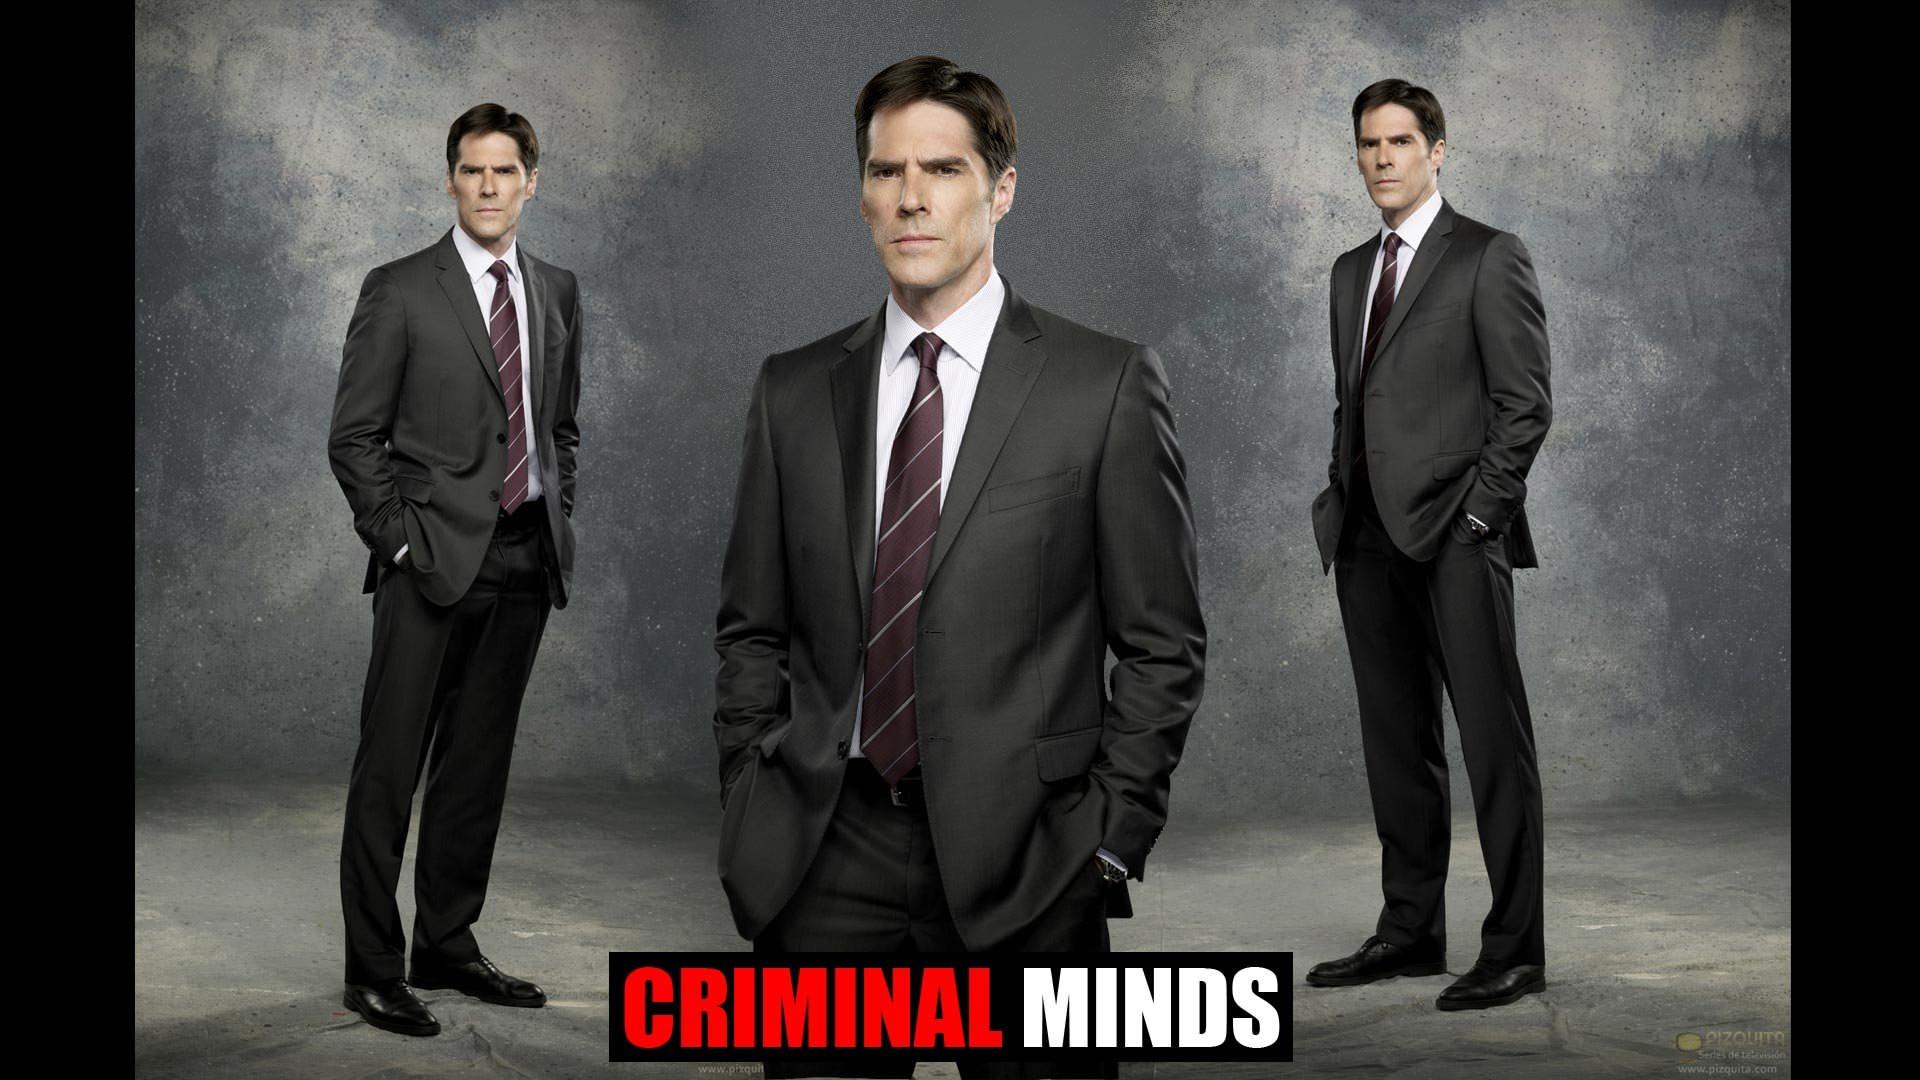 download Criminal Minds wallpaper full HD for PC